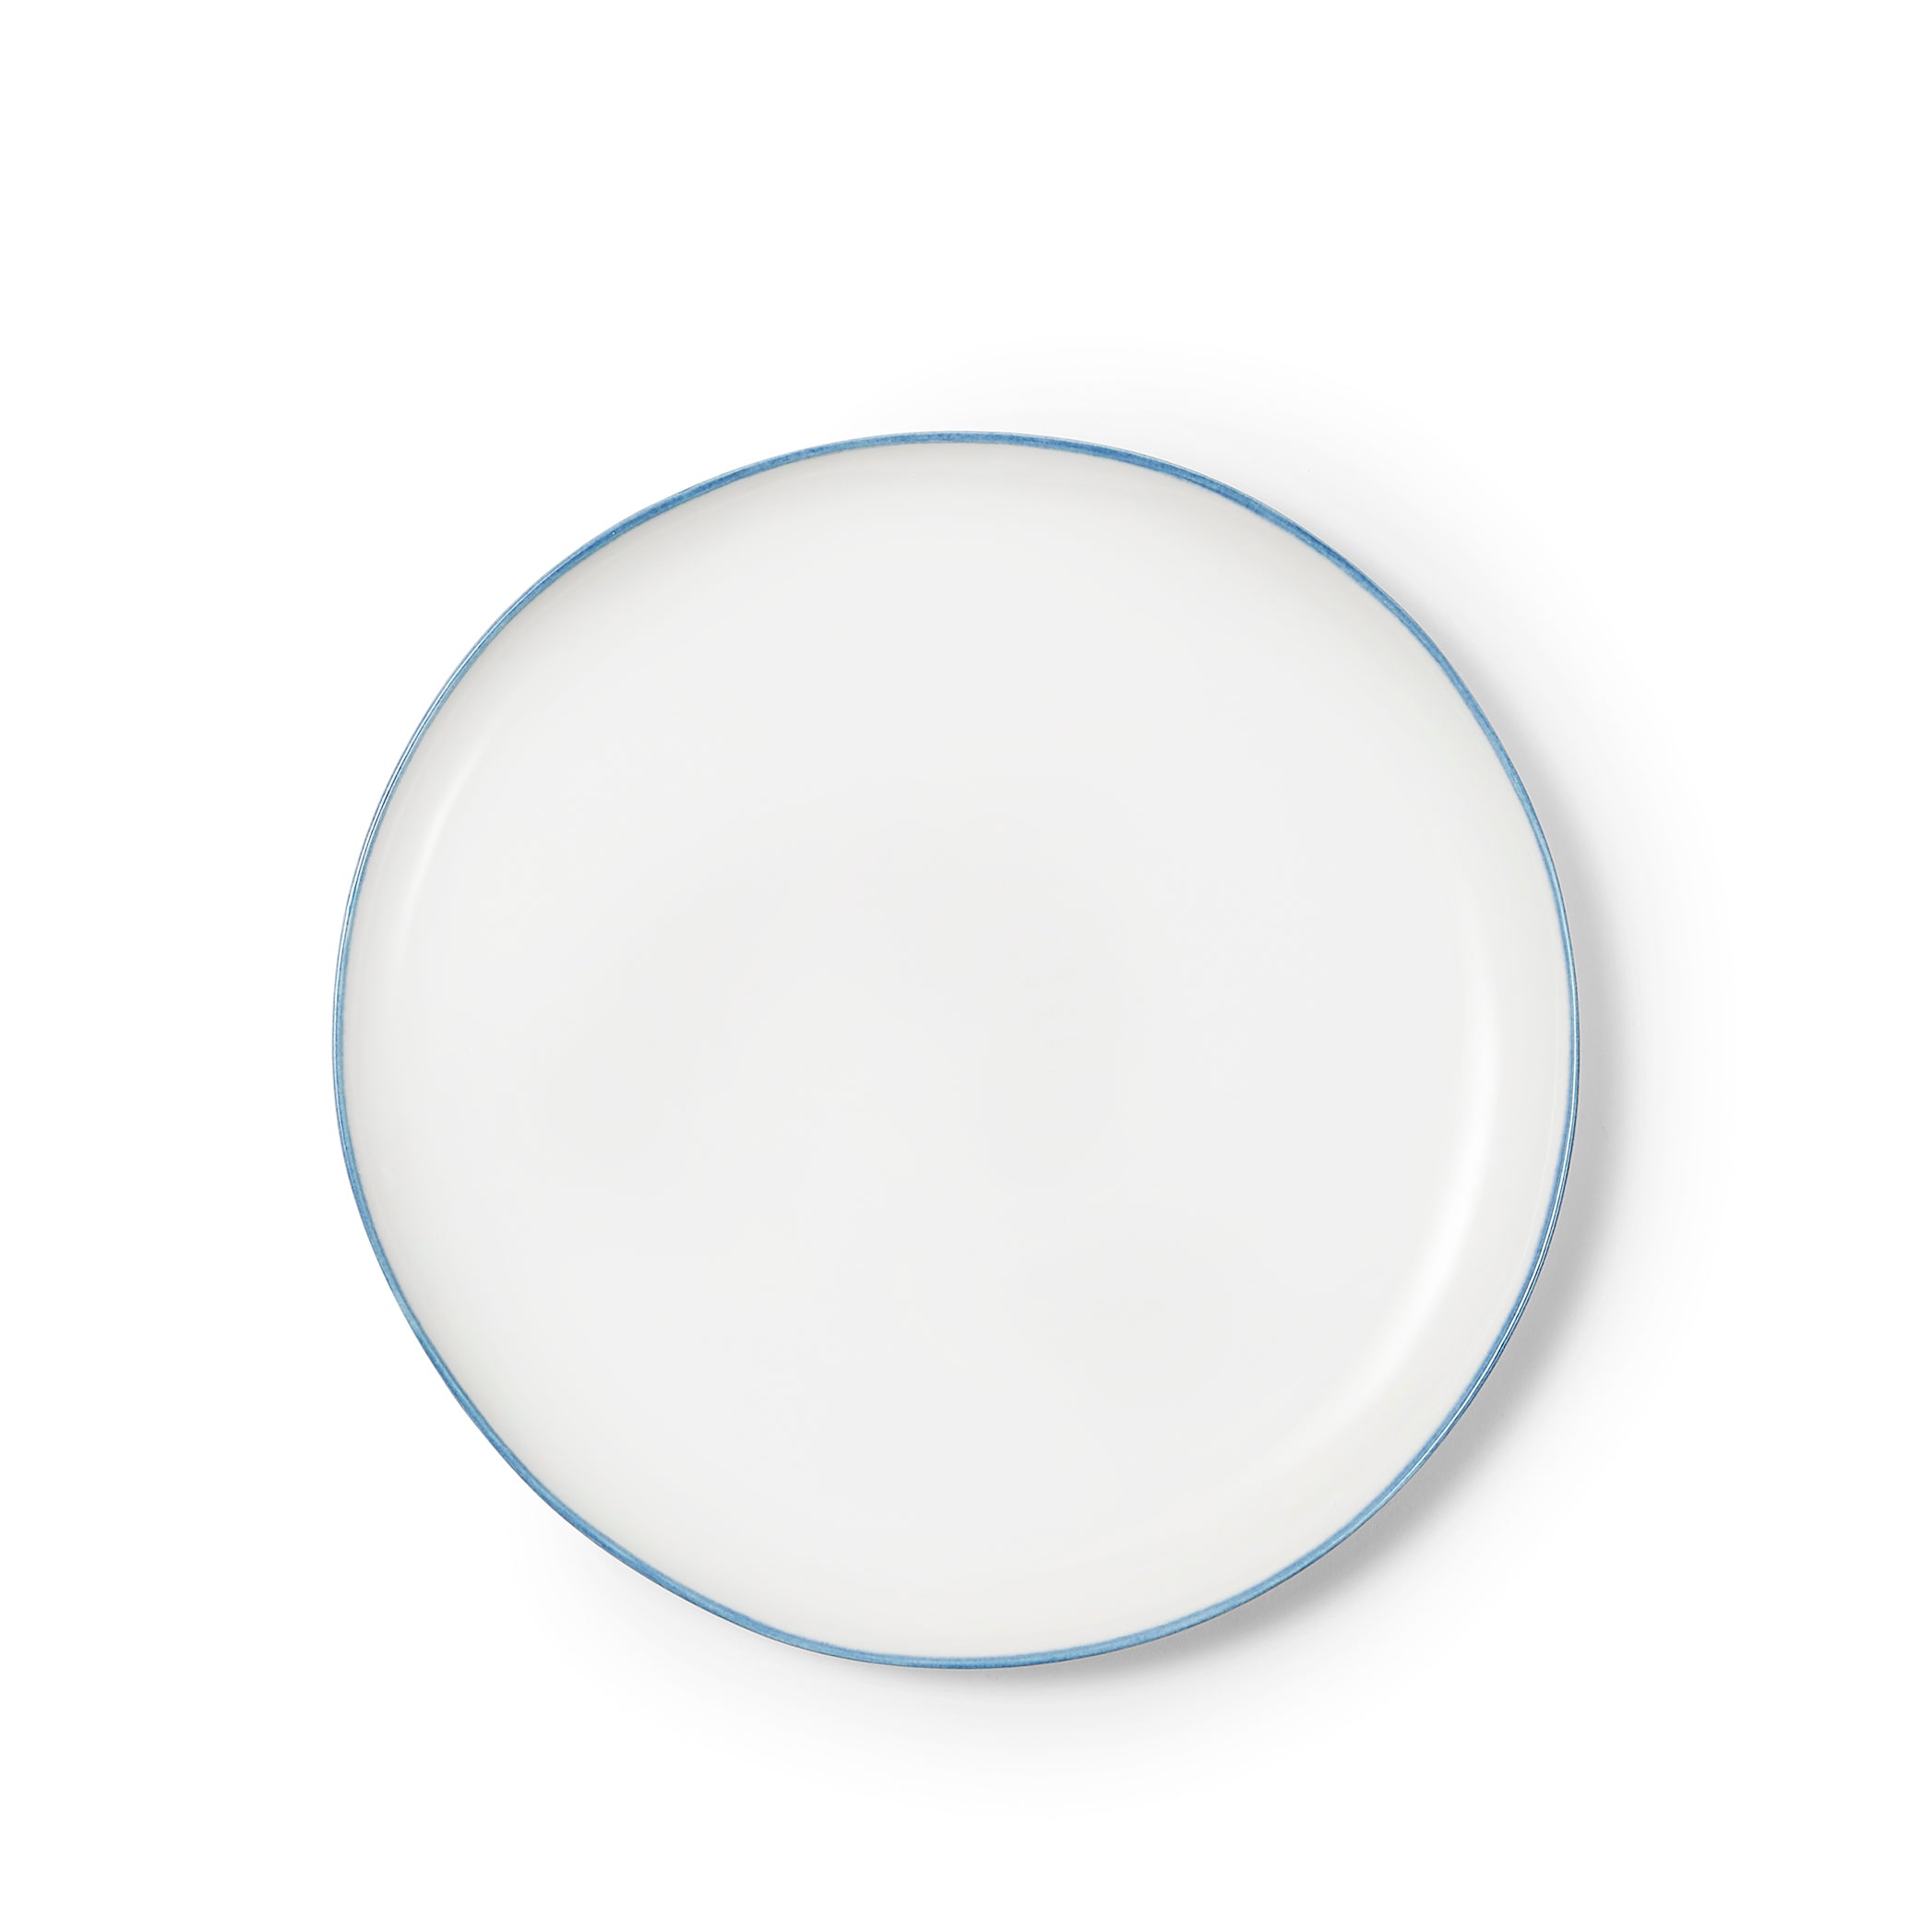 Made to Order - Summerill & Bishop Handmade 31cm Porcelain Dinner Plate with Blue Rim